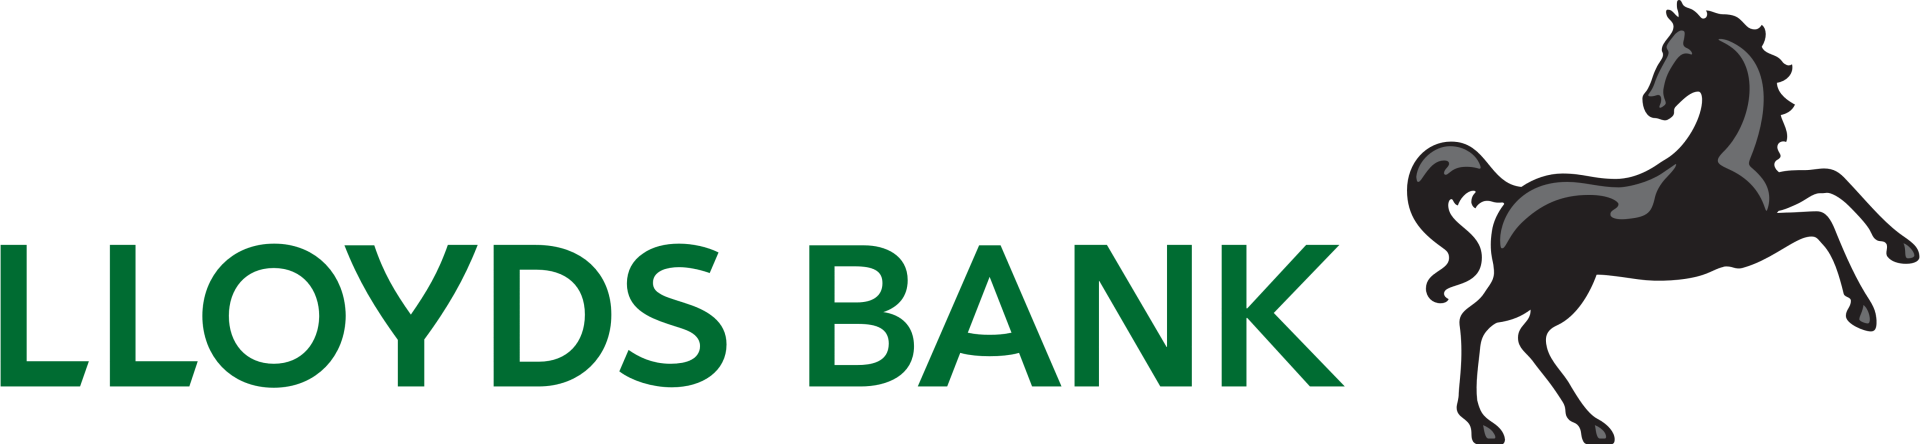 Lloyds-Bank-logo